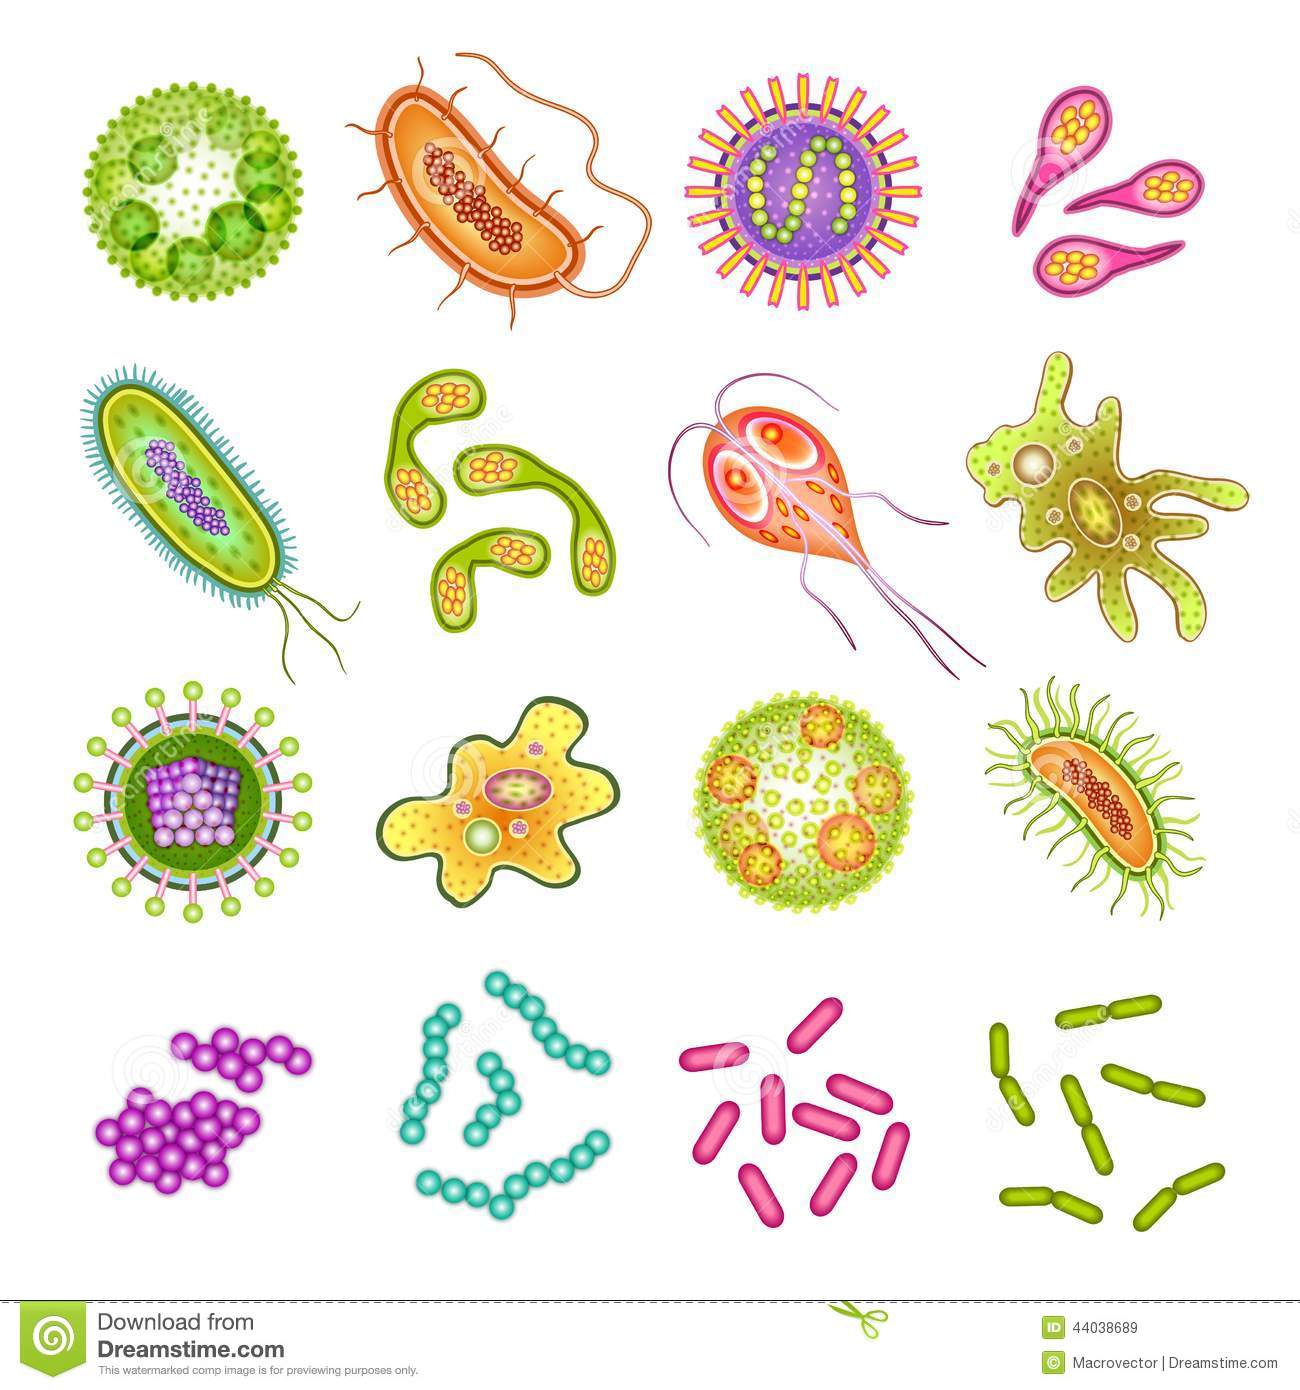 Bacterias - virus